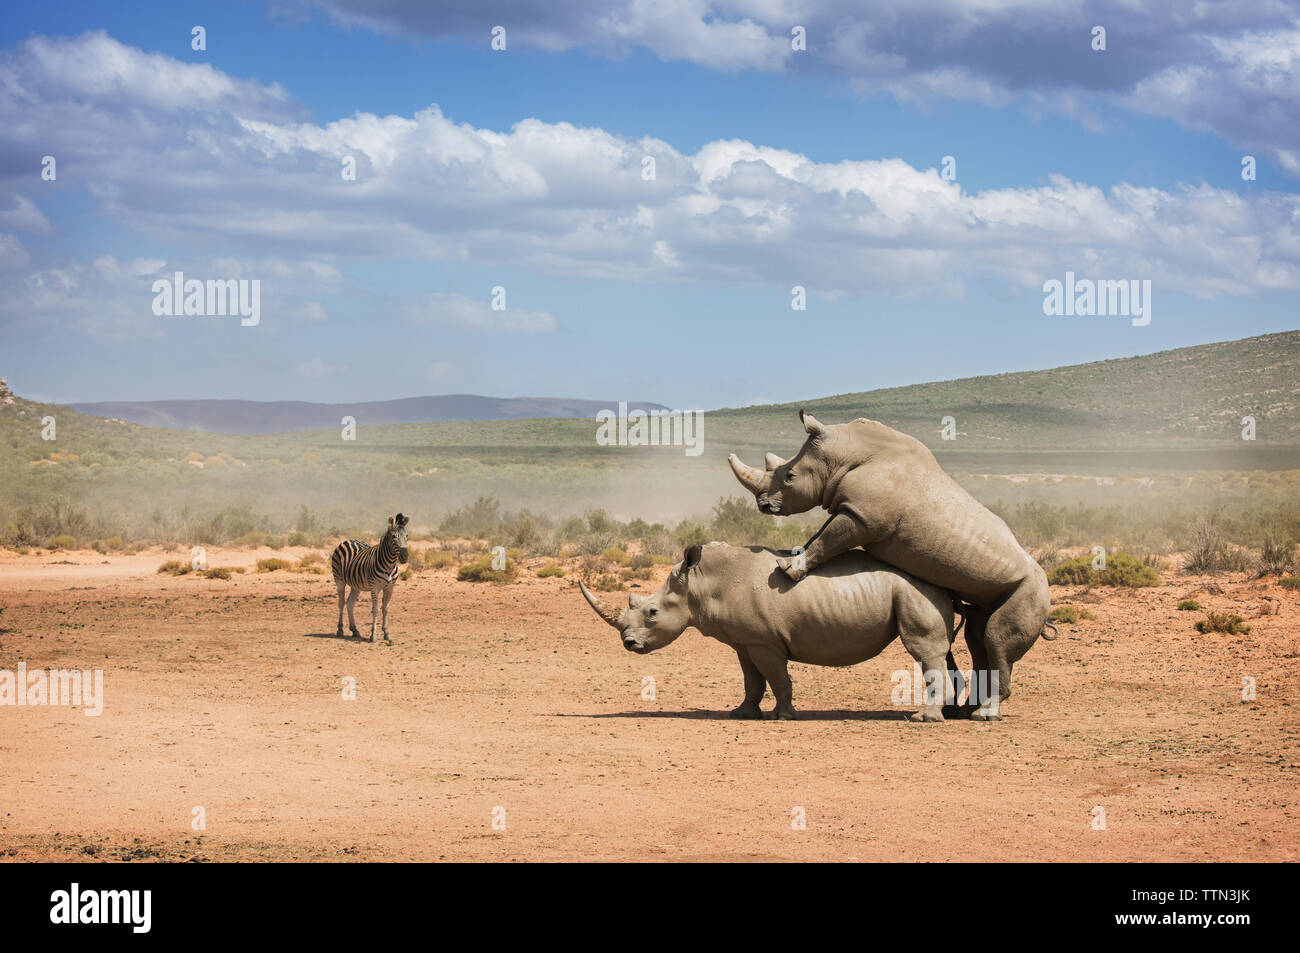 Rhinoceroses mating at national park Stock Photo